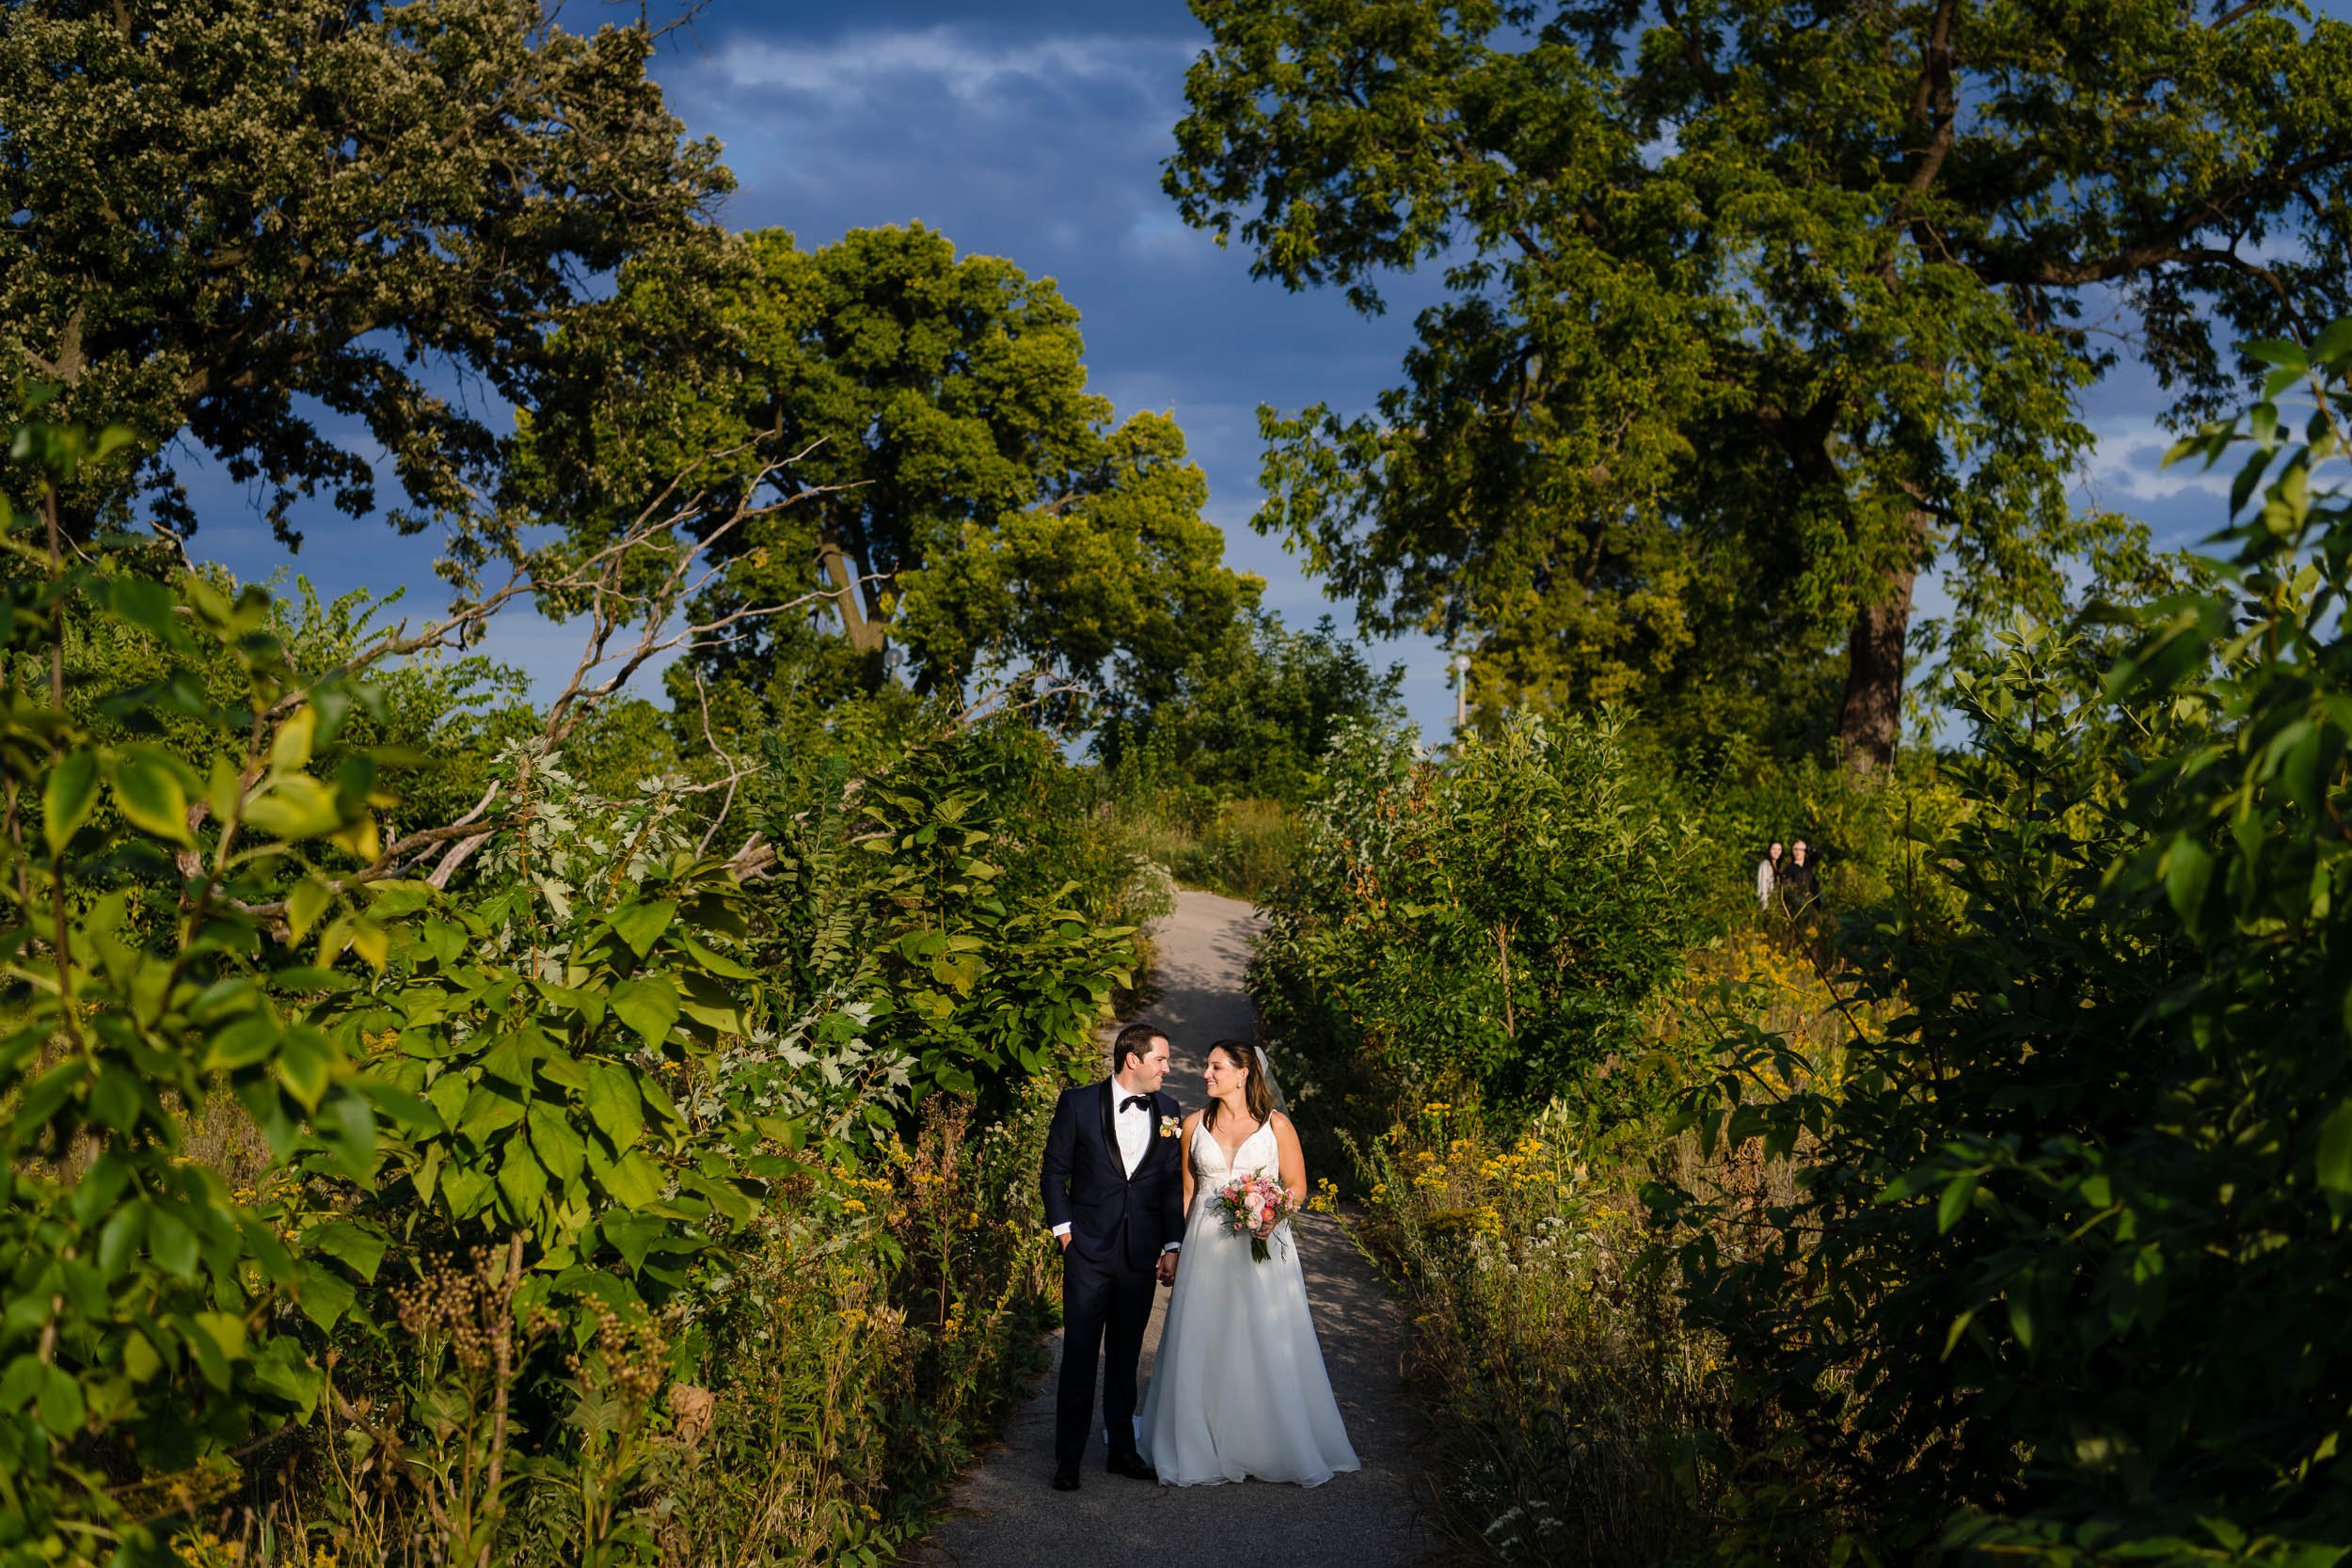 Lincoln Park Nature Boardwalk | Outdoor Wedding Portrait | Chicago IL